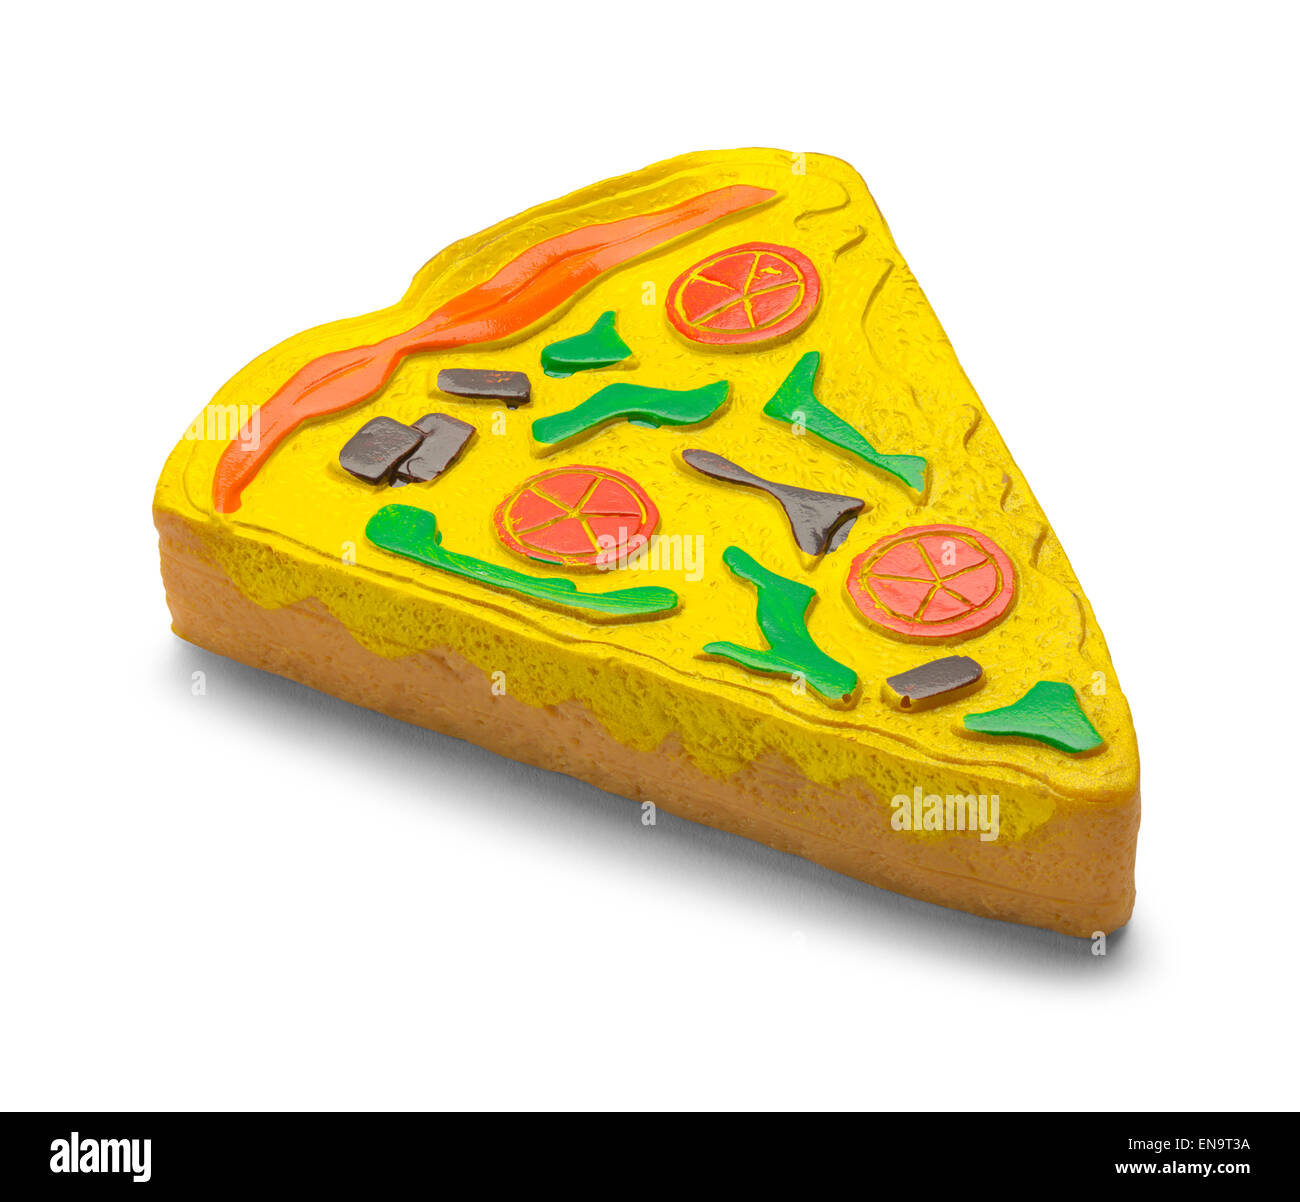 Rubber Dog Toy Pizza Slice Isolated on White Background. Stock Photo